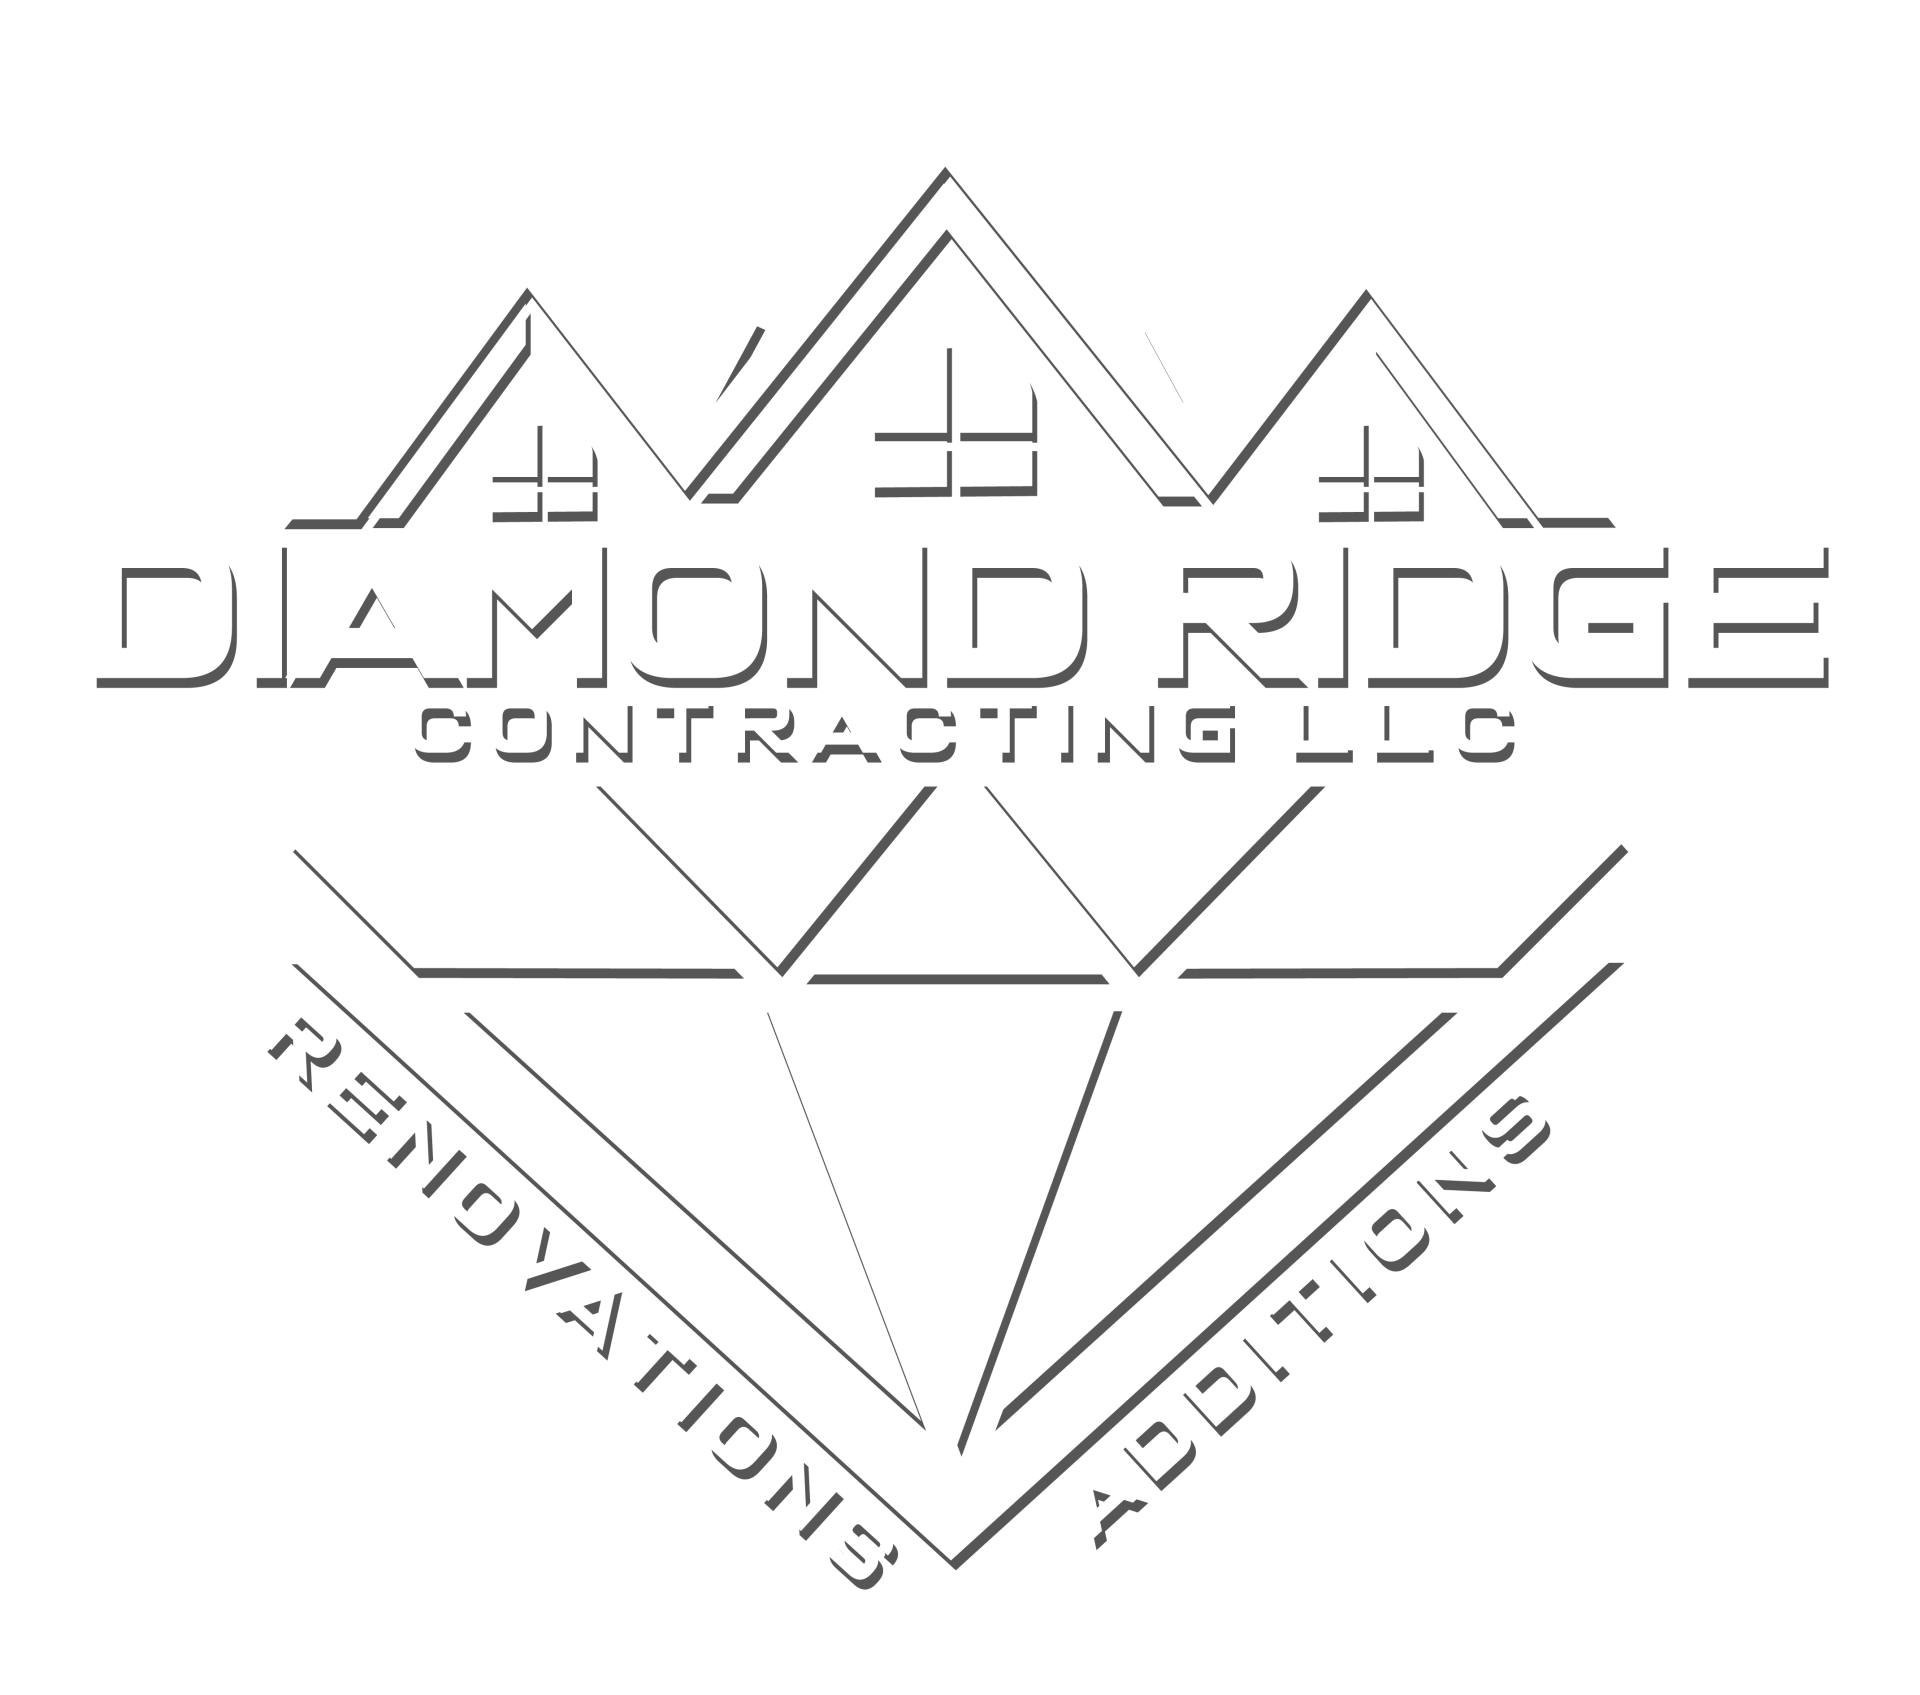 Diamond Ridge Contracting, LLC